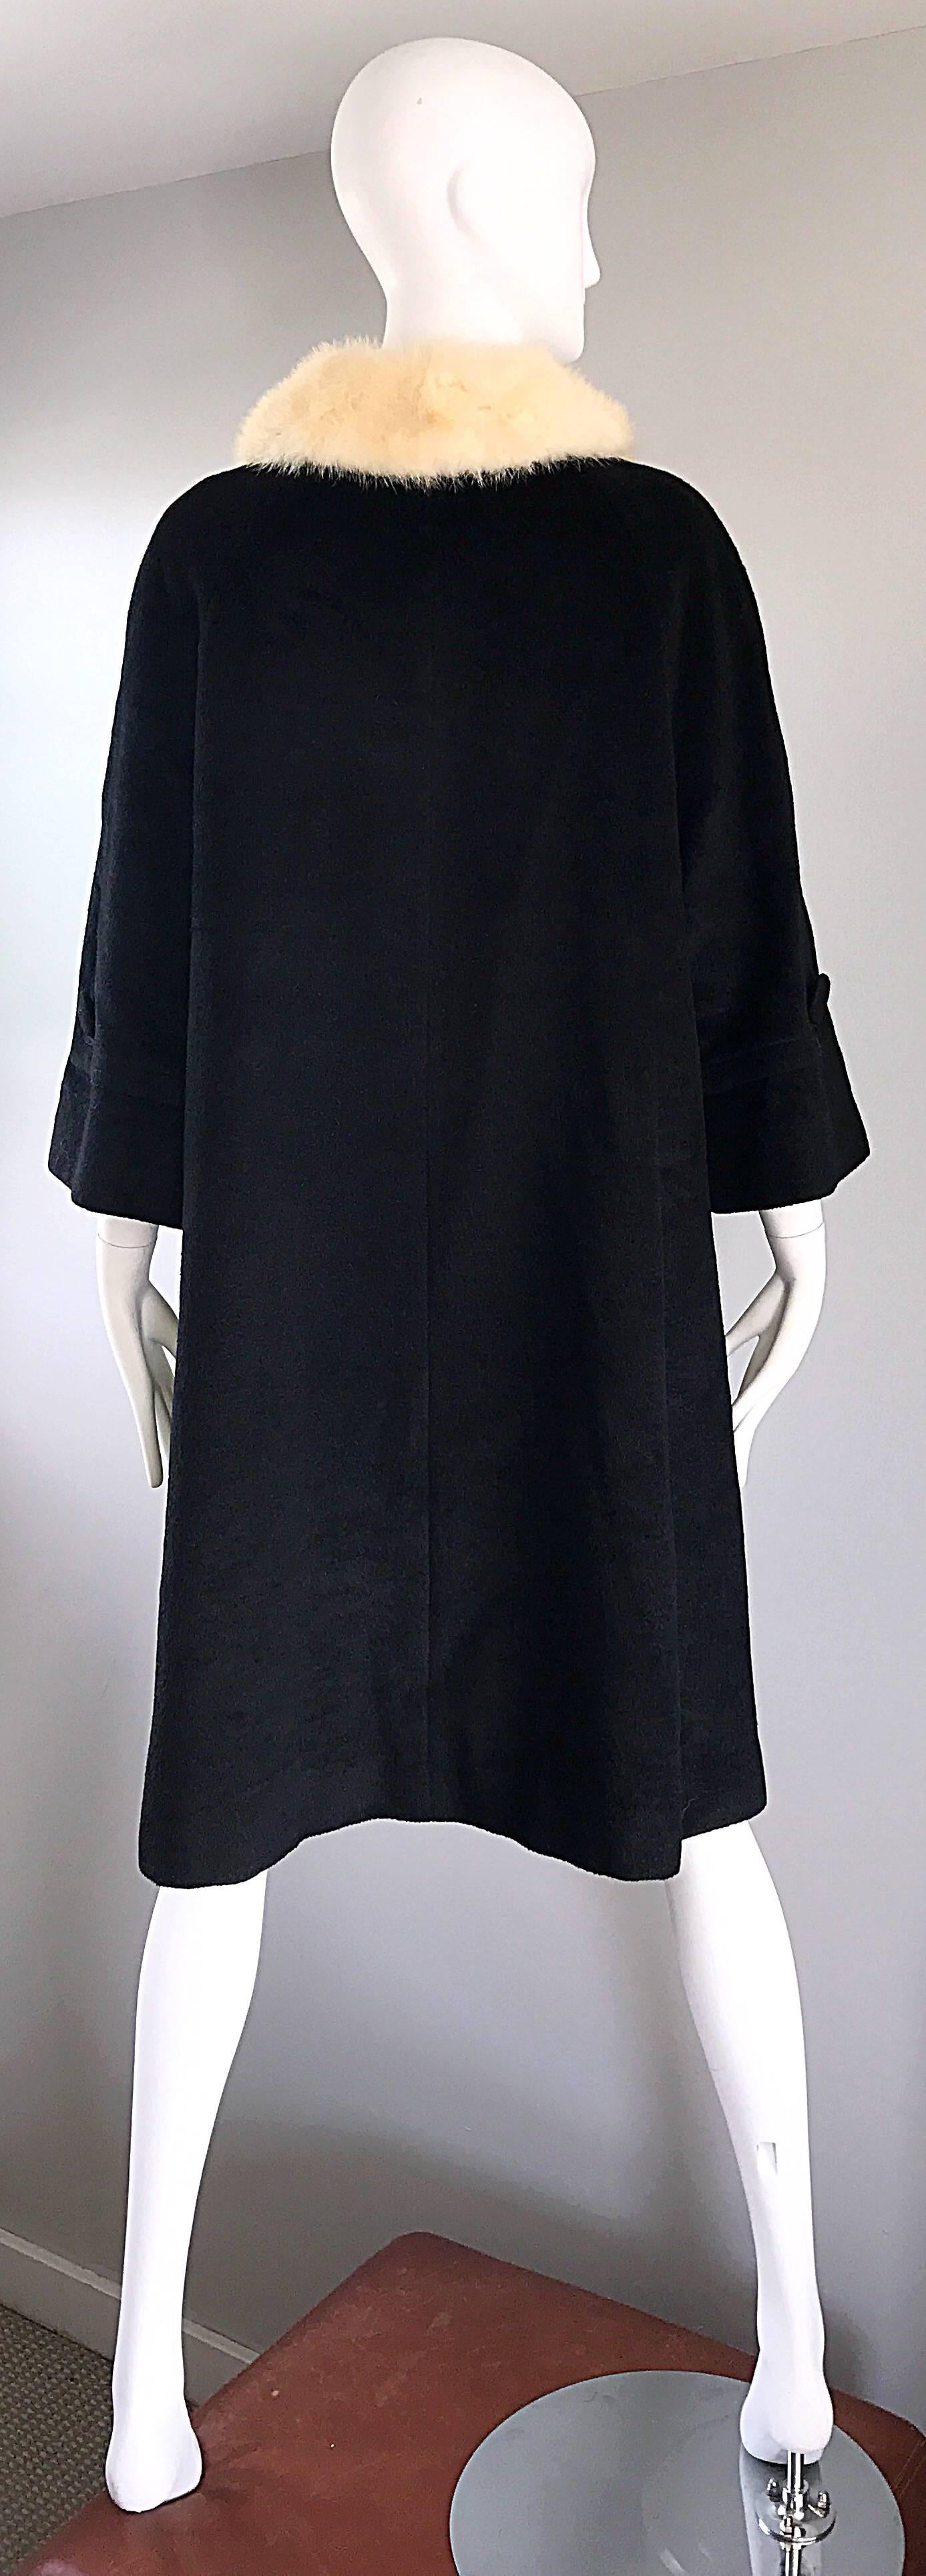 Women's Lilli Ann 1960s Black and White Wool + Mink Fur Vintage 60s Swing Jacket Coat  For Sale